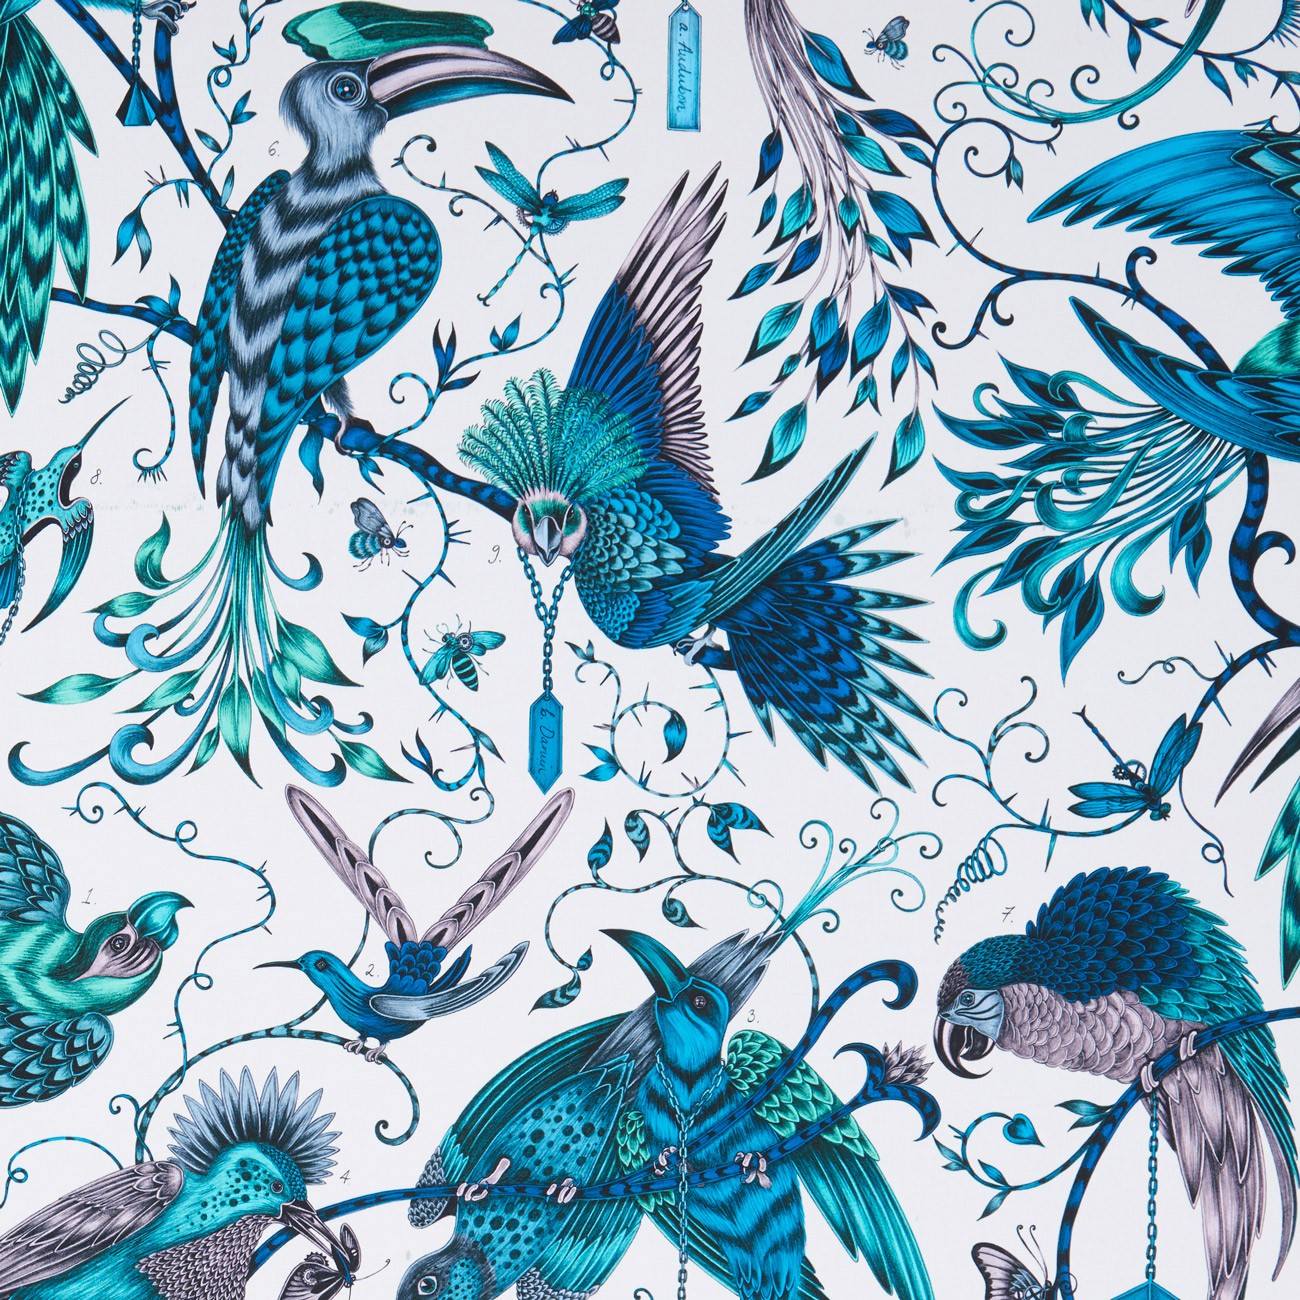 Audubon Jungle Fabric by Emma J Shipley